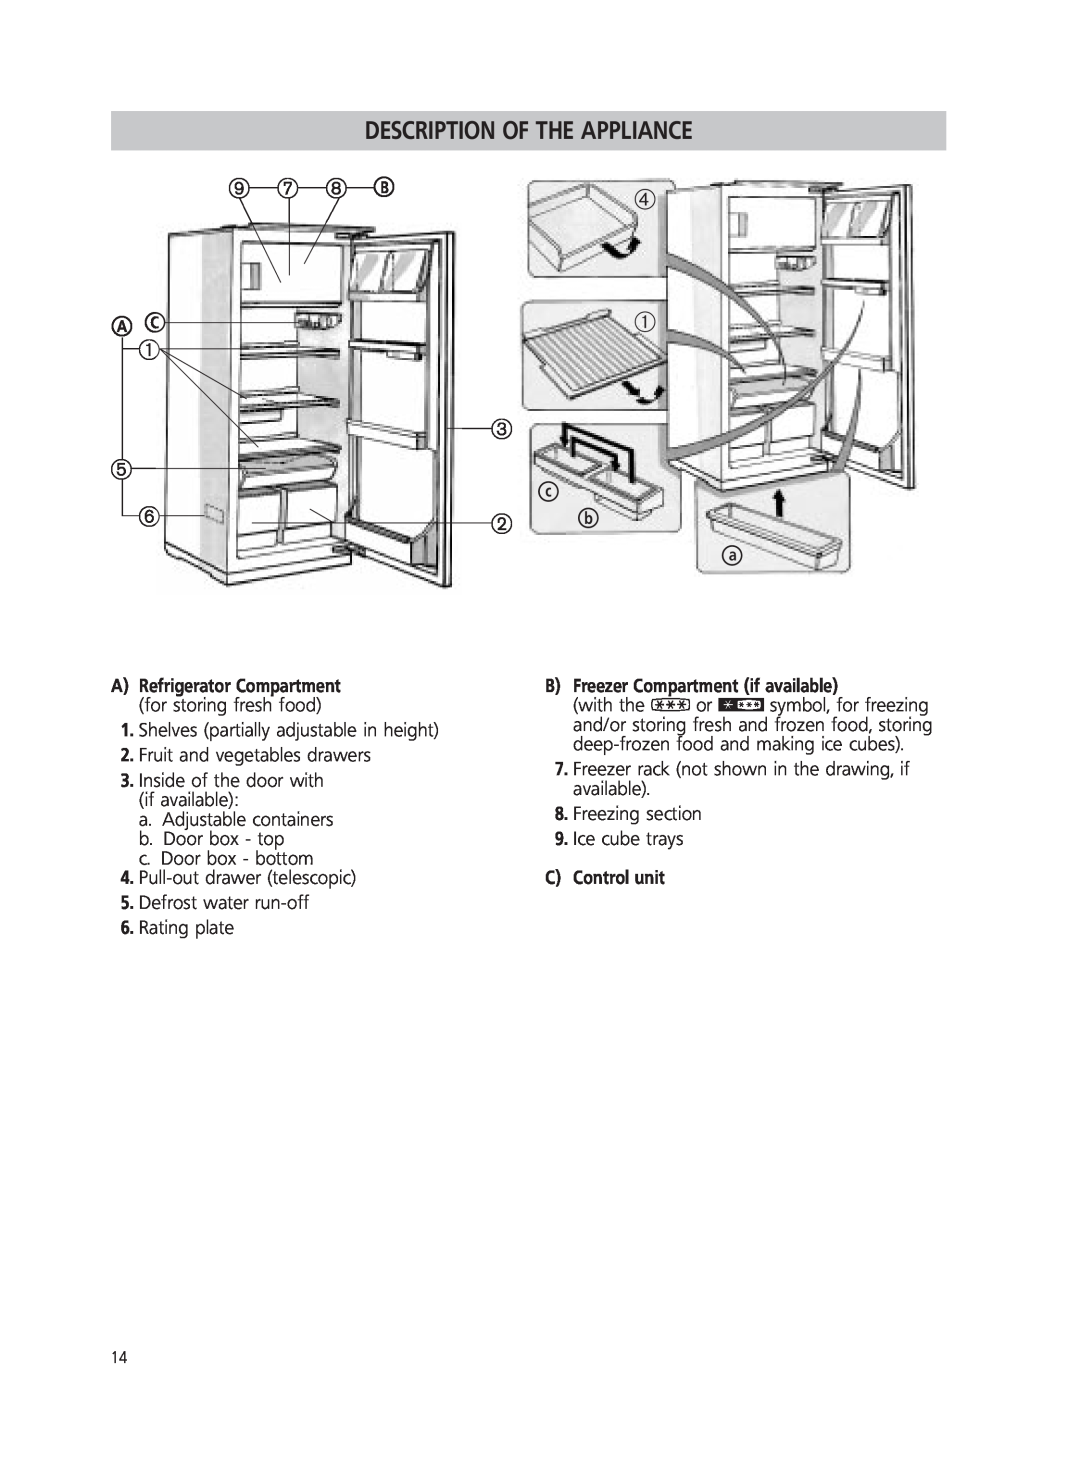 Smeg FR206AP manual q e t Xc zw Xb Xa, BFreezer Compartment if available, CControl unit, Description Of The Appliance 